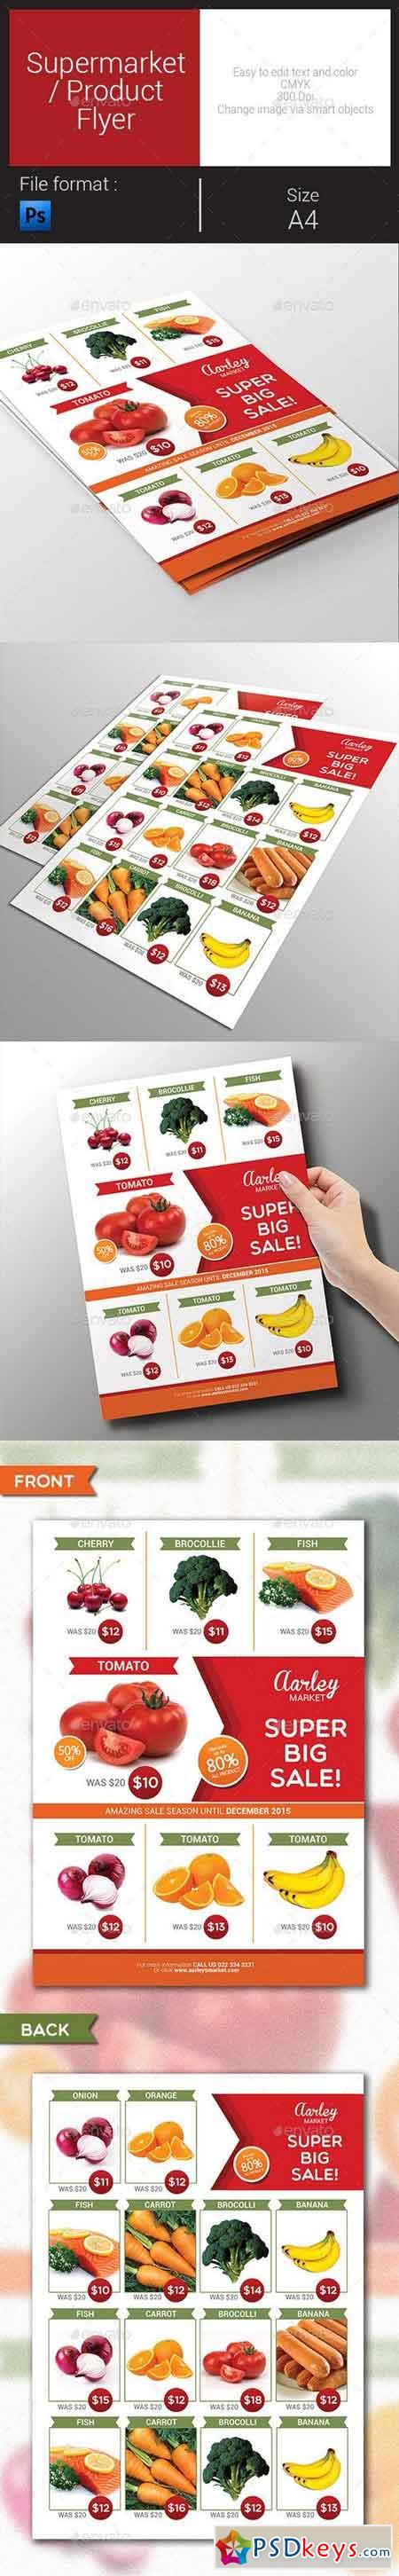 Supermarket Product Flyer 9164447